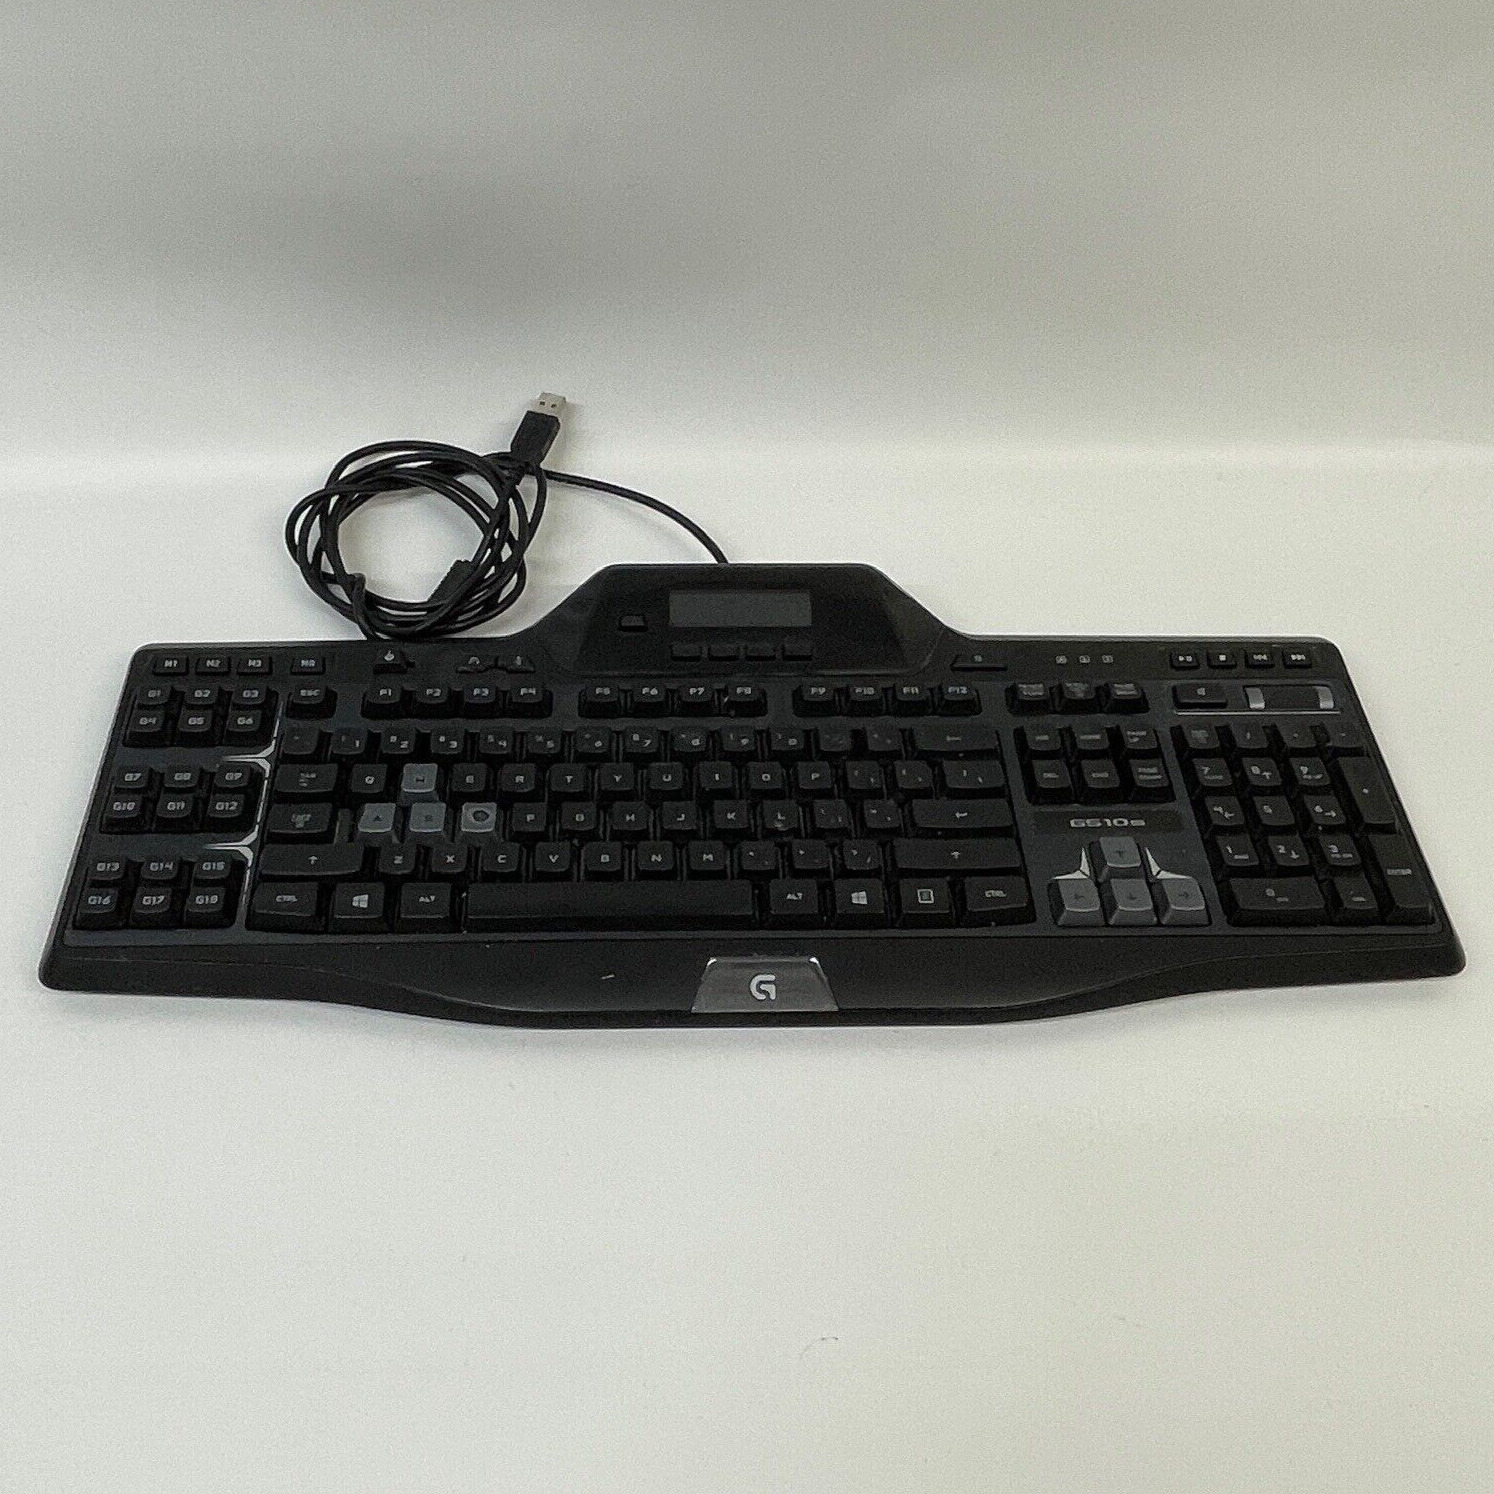 Logitech G510s Wired USB Gaming Black Keyboard Y-U0010 Tested/Working